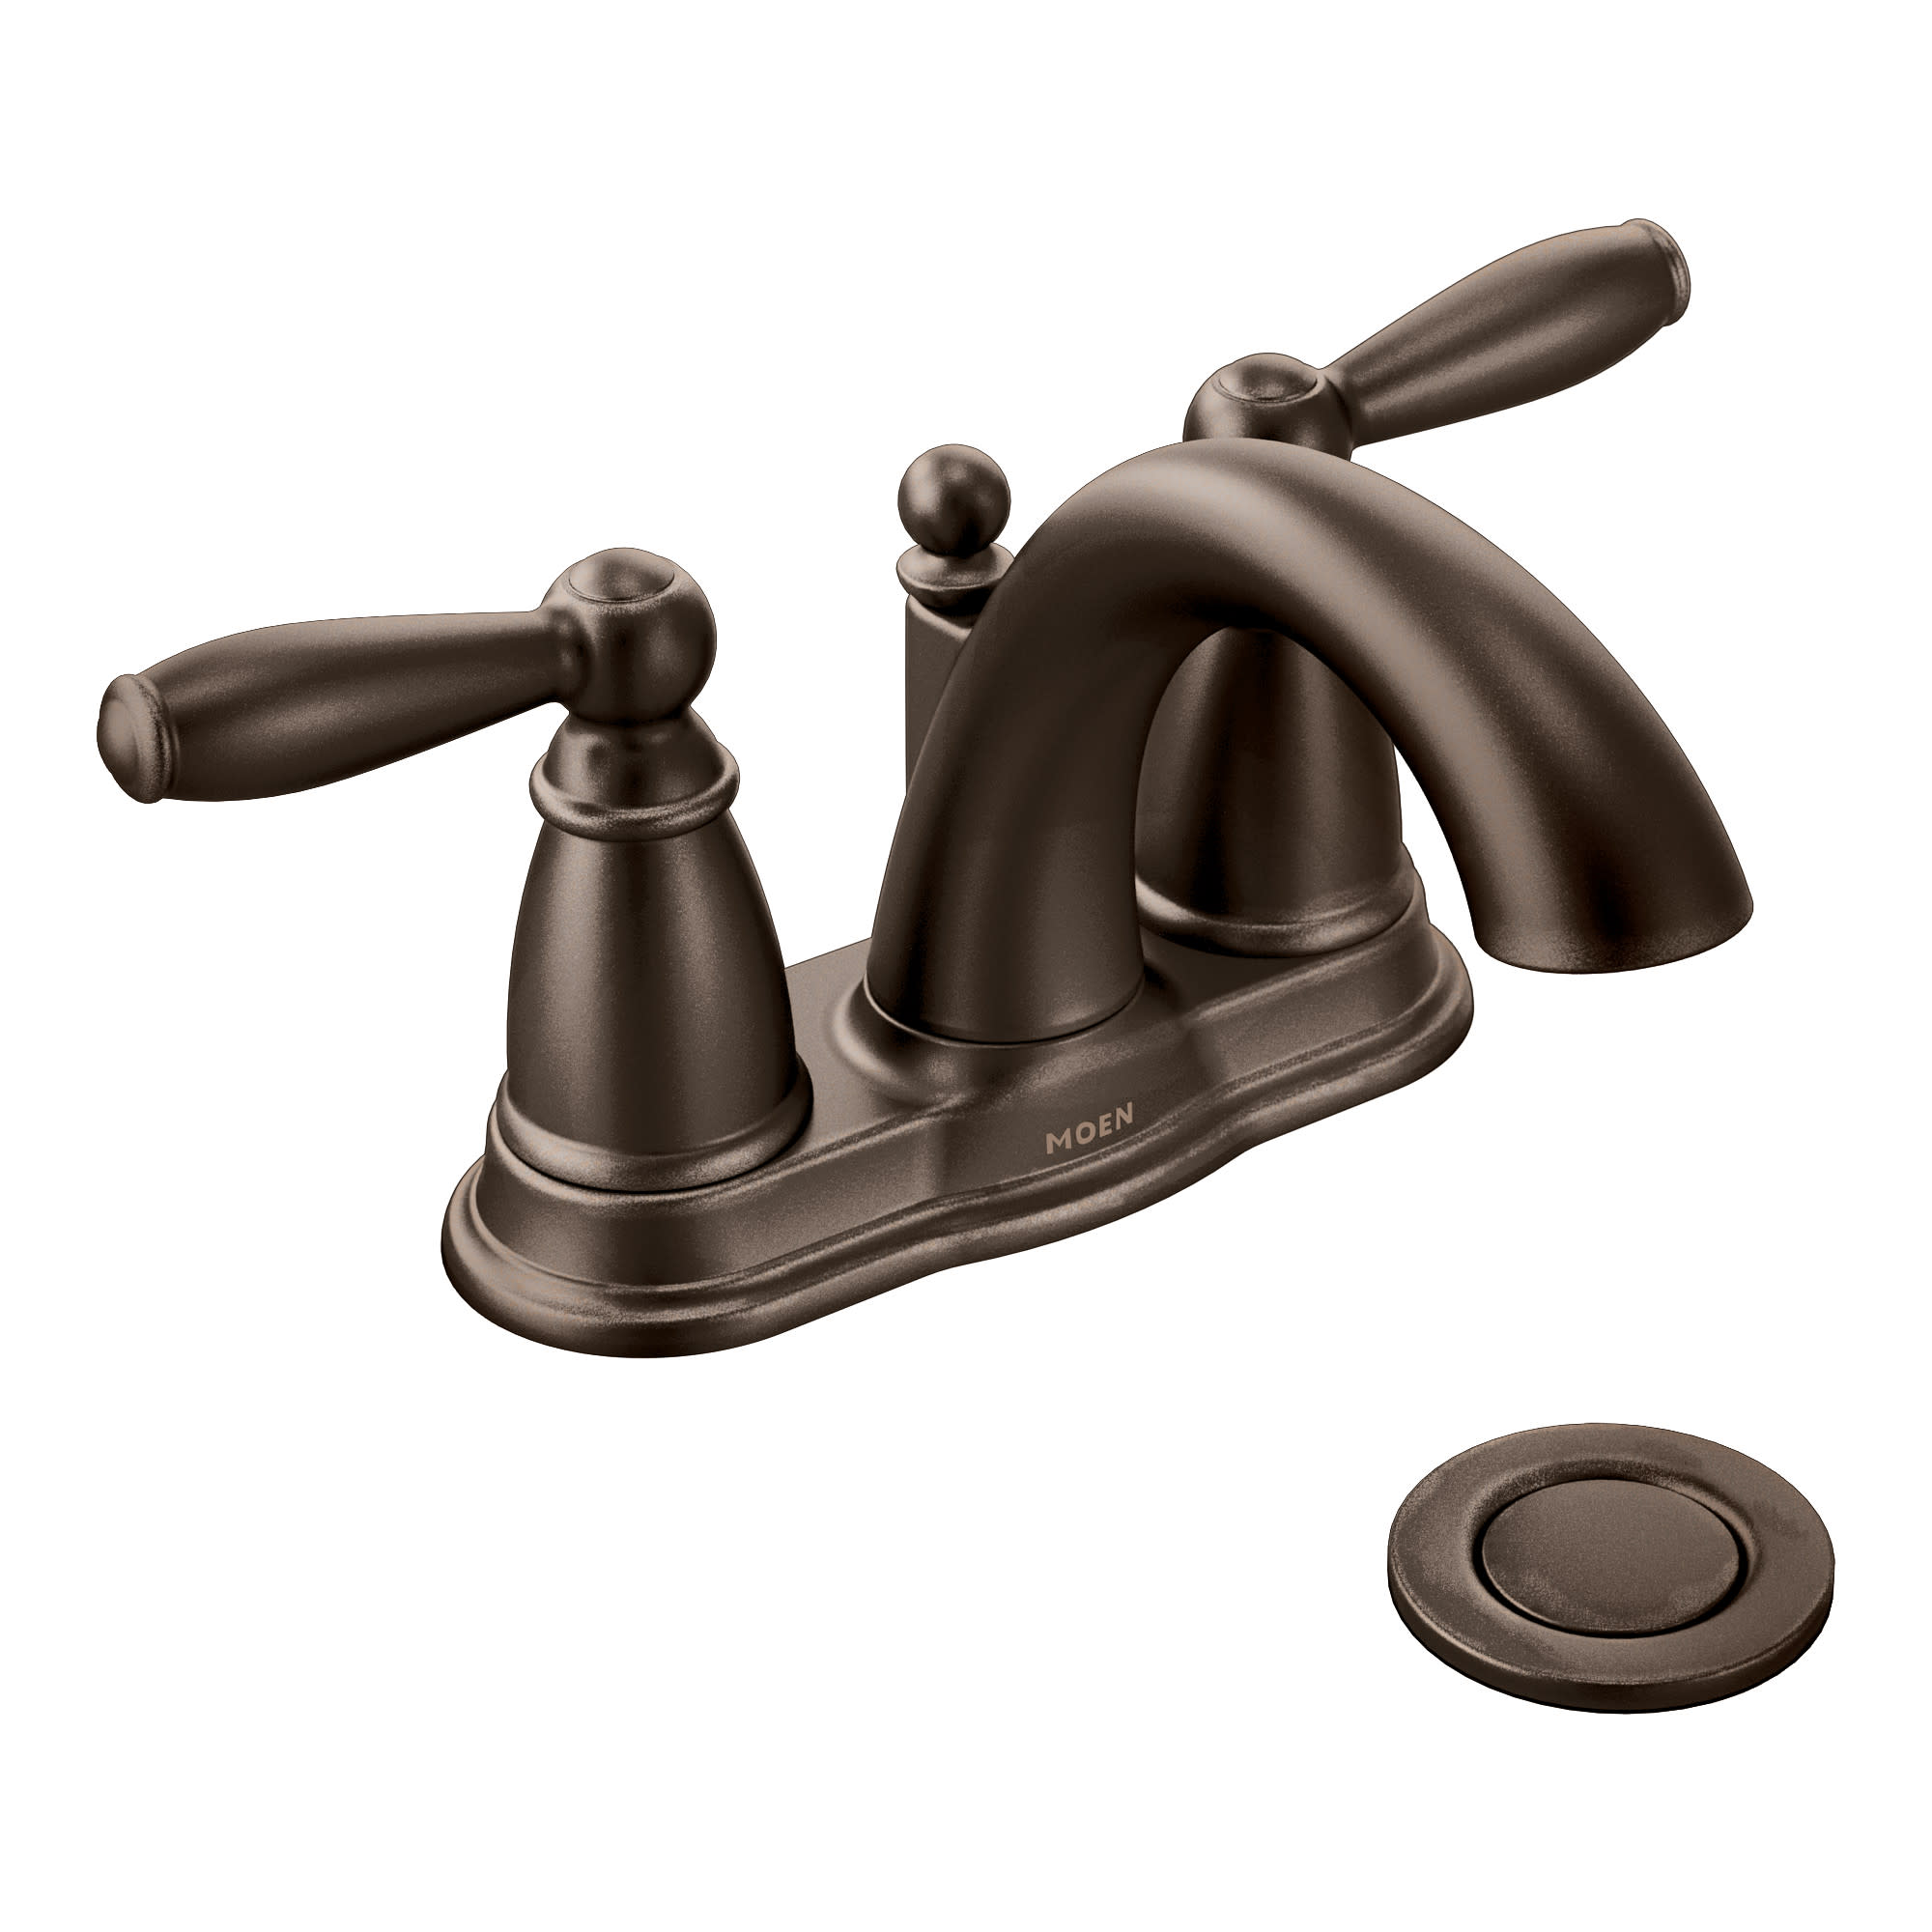 Moen 6610orb 2pkg Oil Rubbed Bronze, Moen Brantford Bathroom Faucet